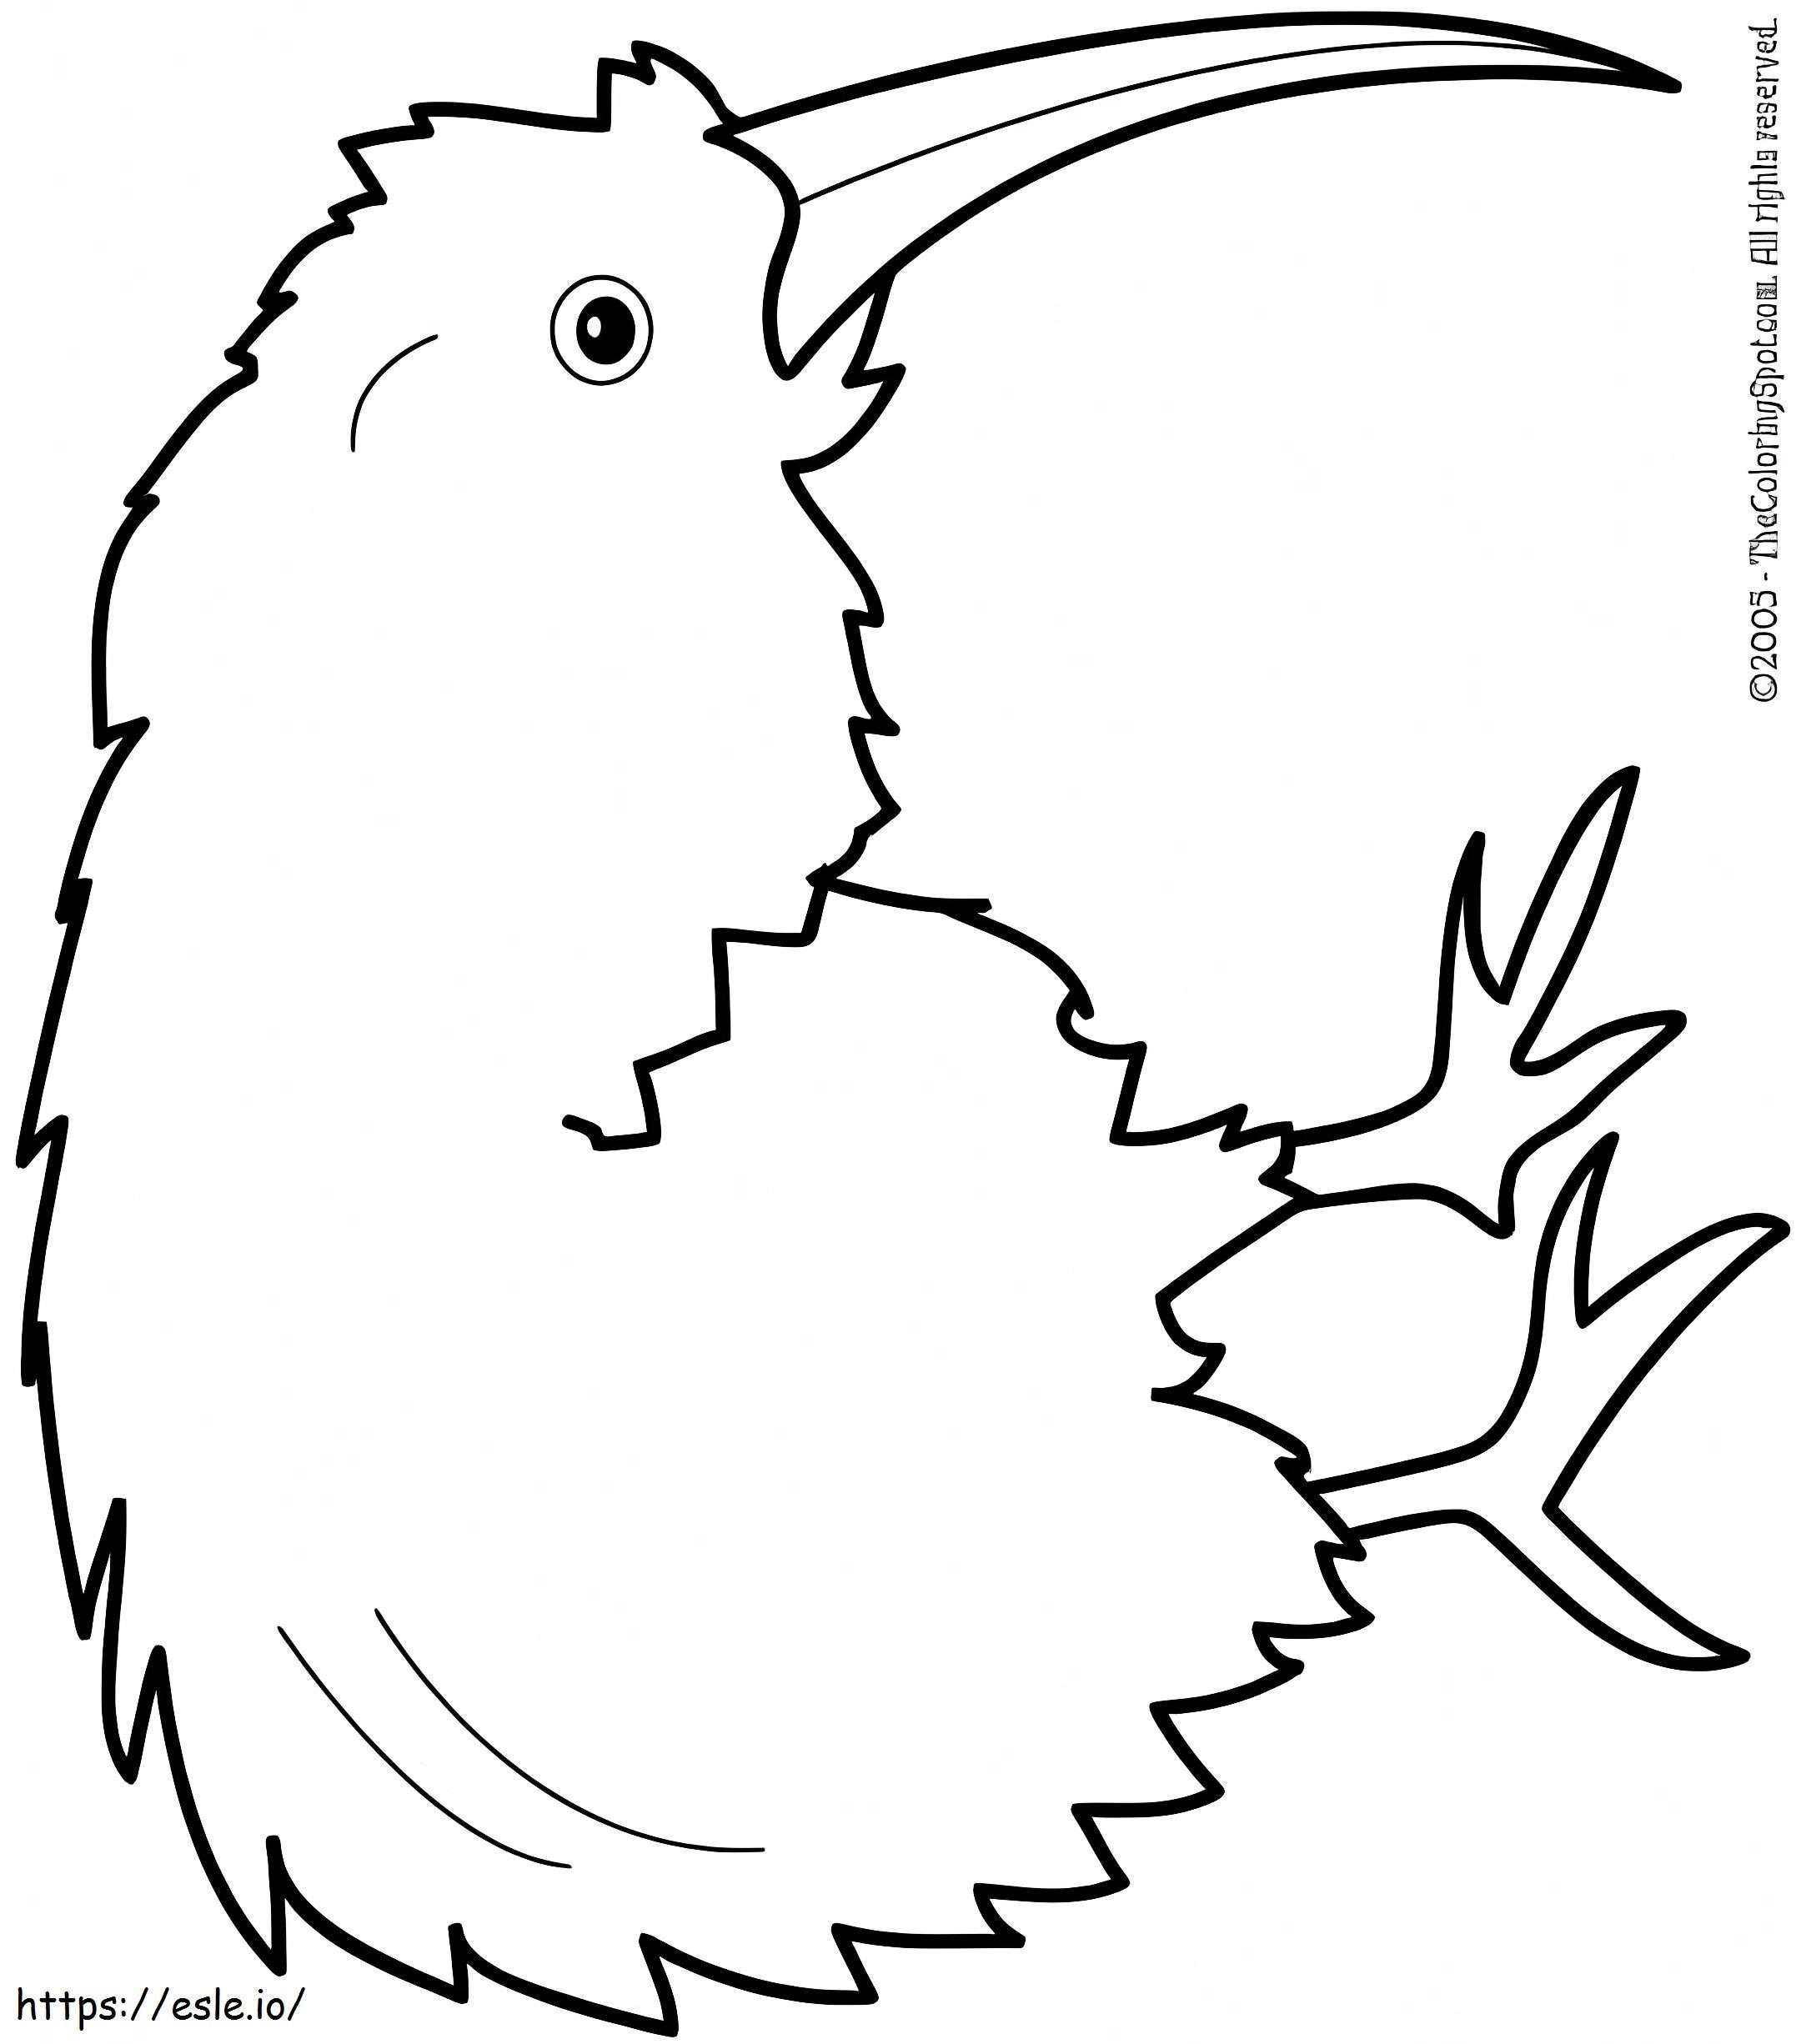 Great Kiwi Bird coloring page